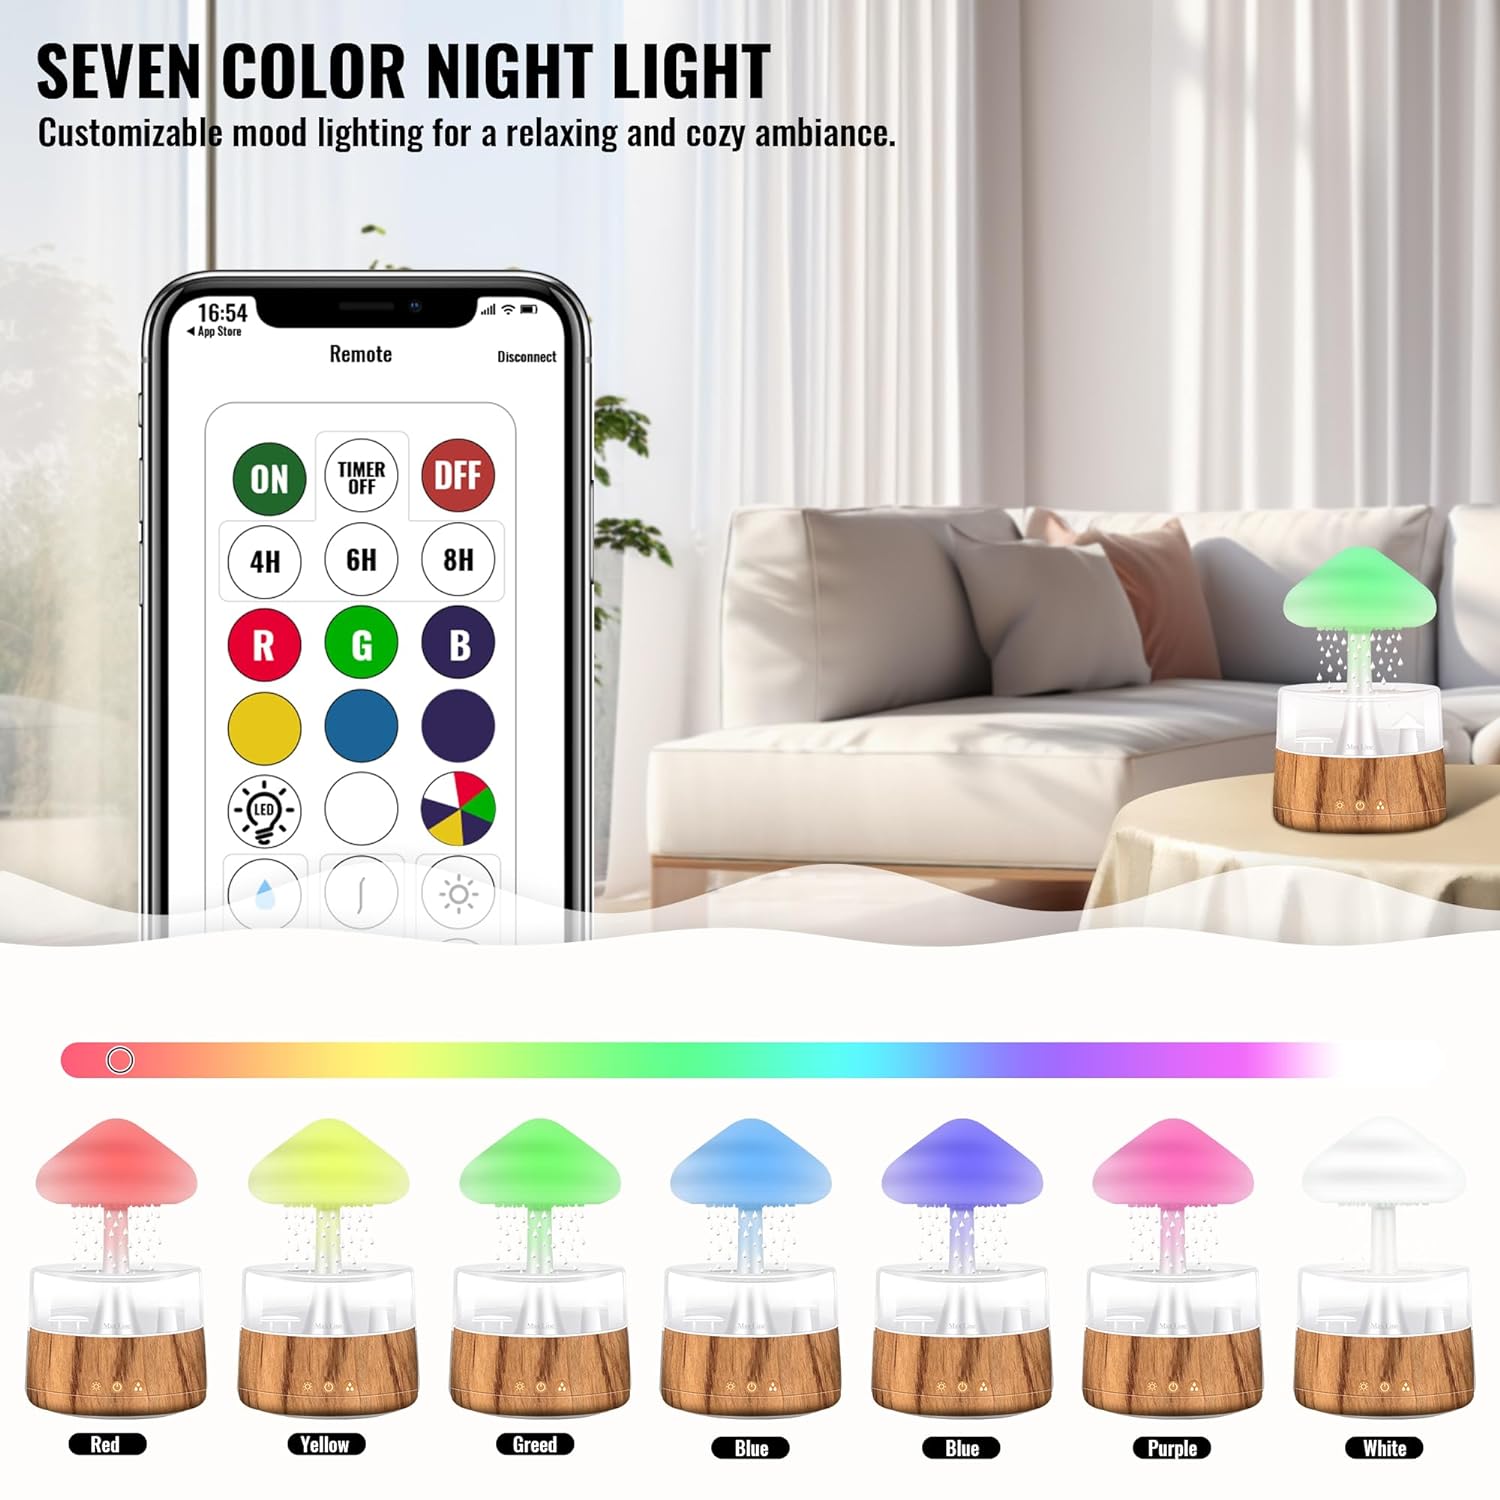 EvCZen Rain Cloud Humidifier Night Light with 7 Changing Colors